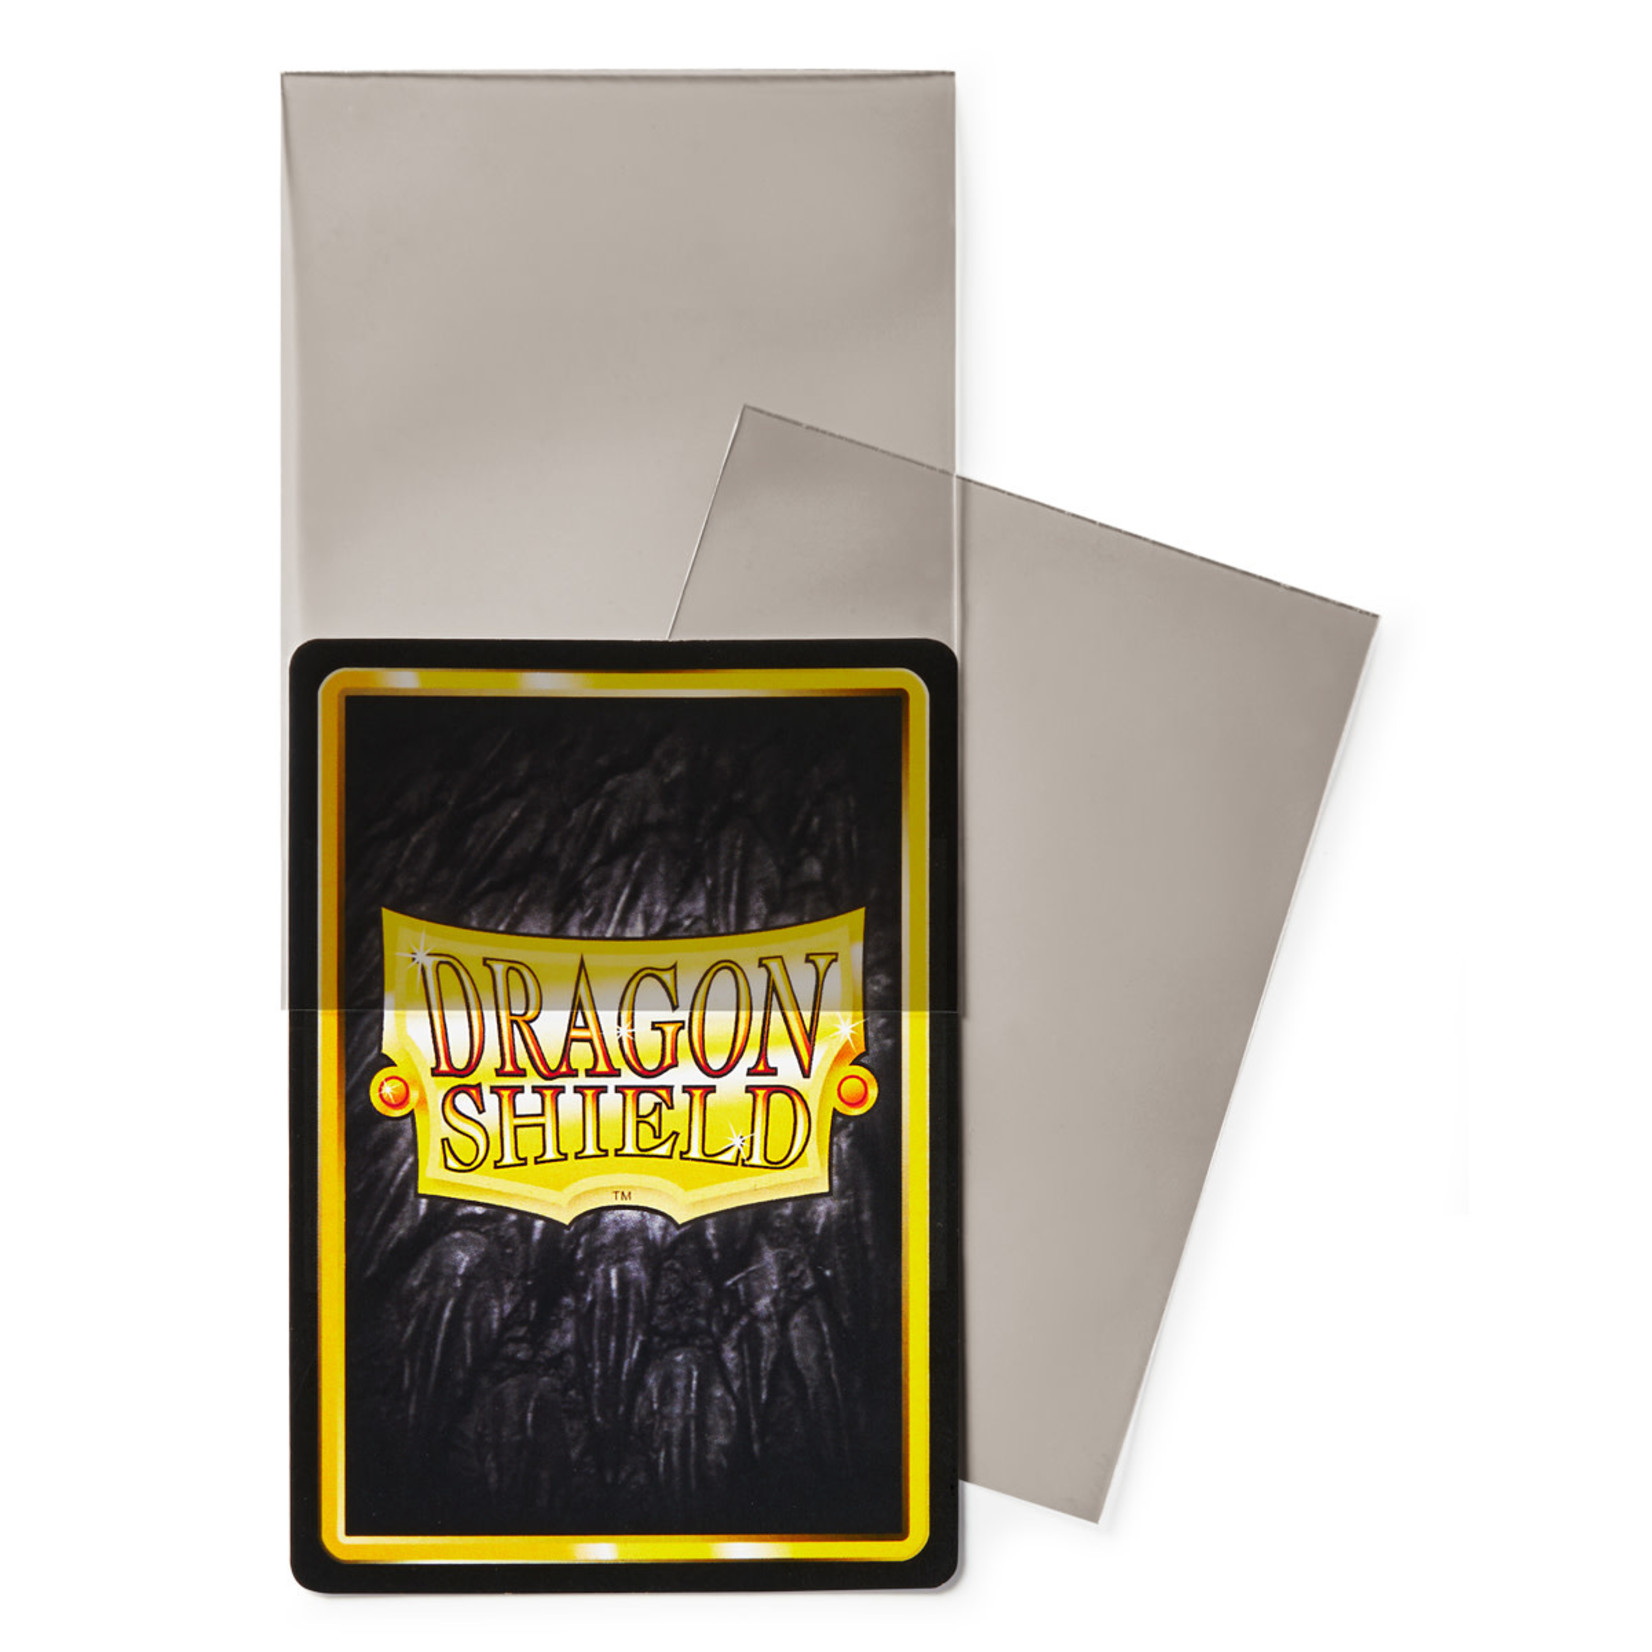 Arcane Tinmen Dragon Shield Standard Perfect Fit Inner Sleeves - Smoke (100)